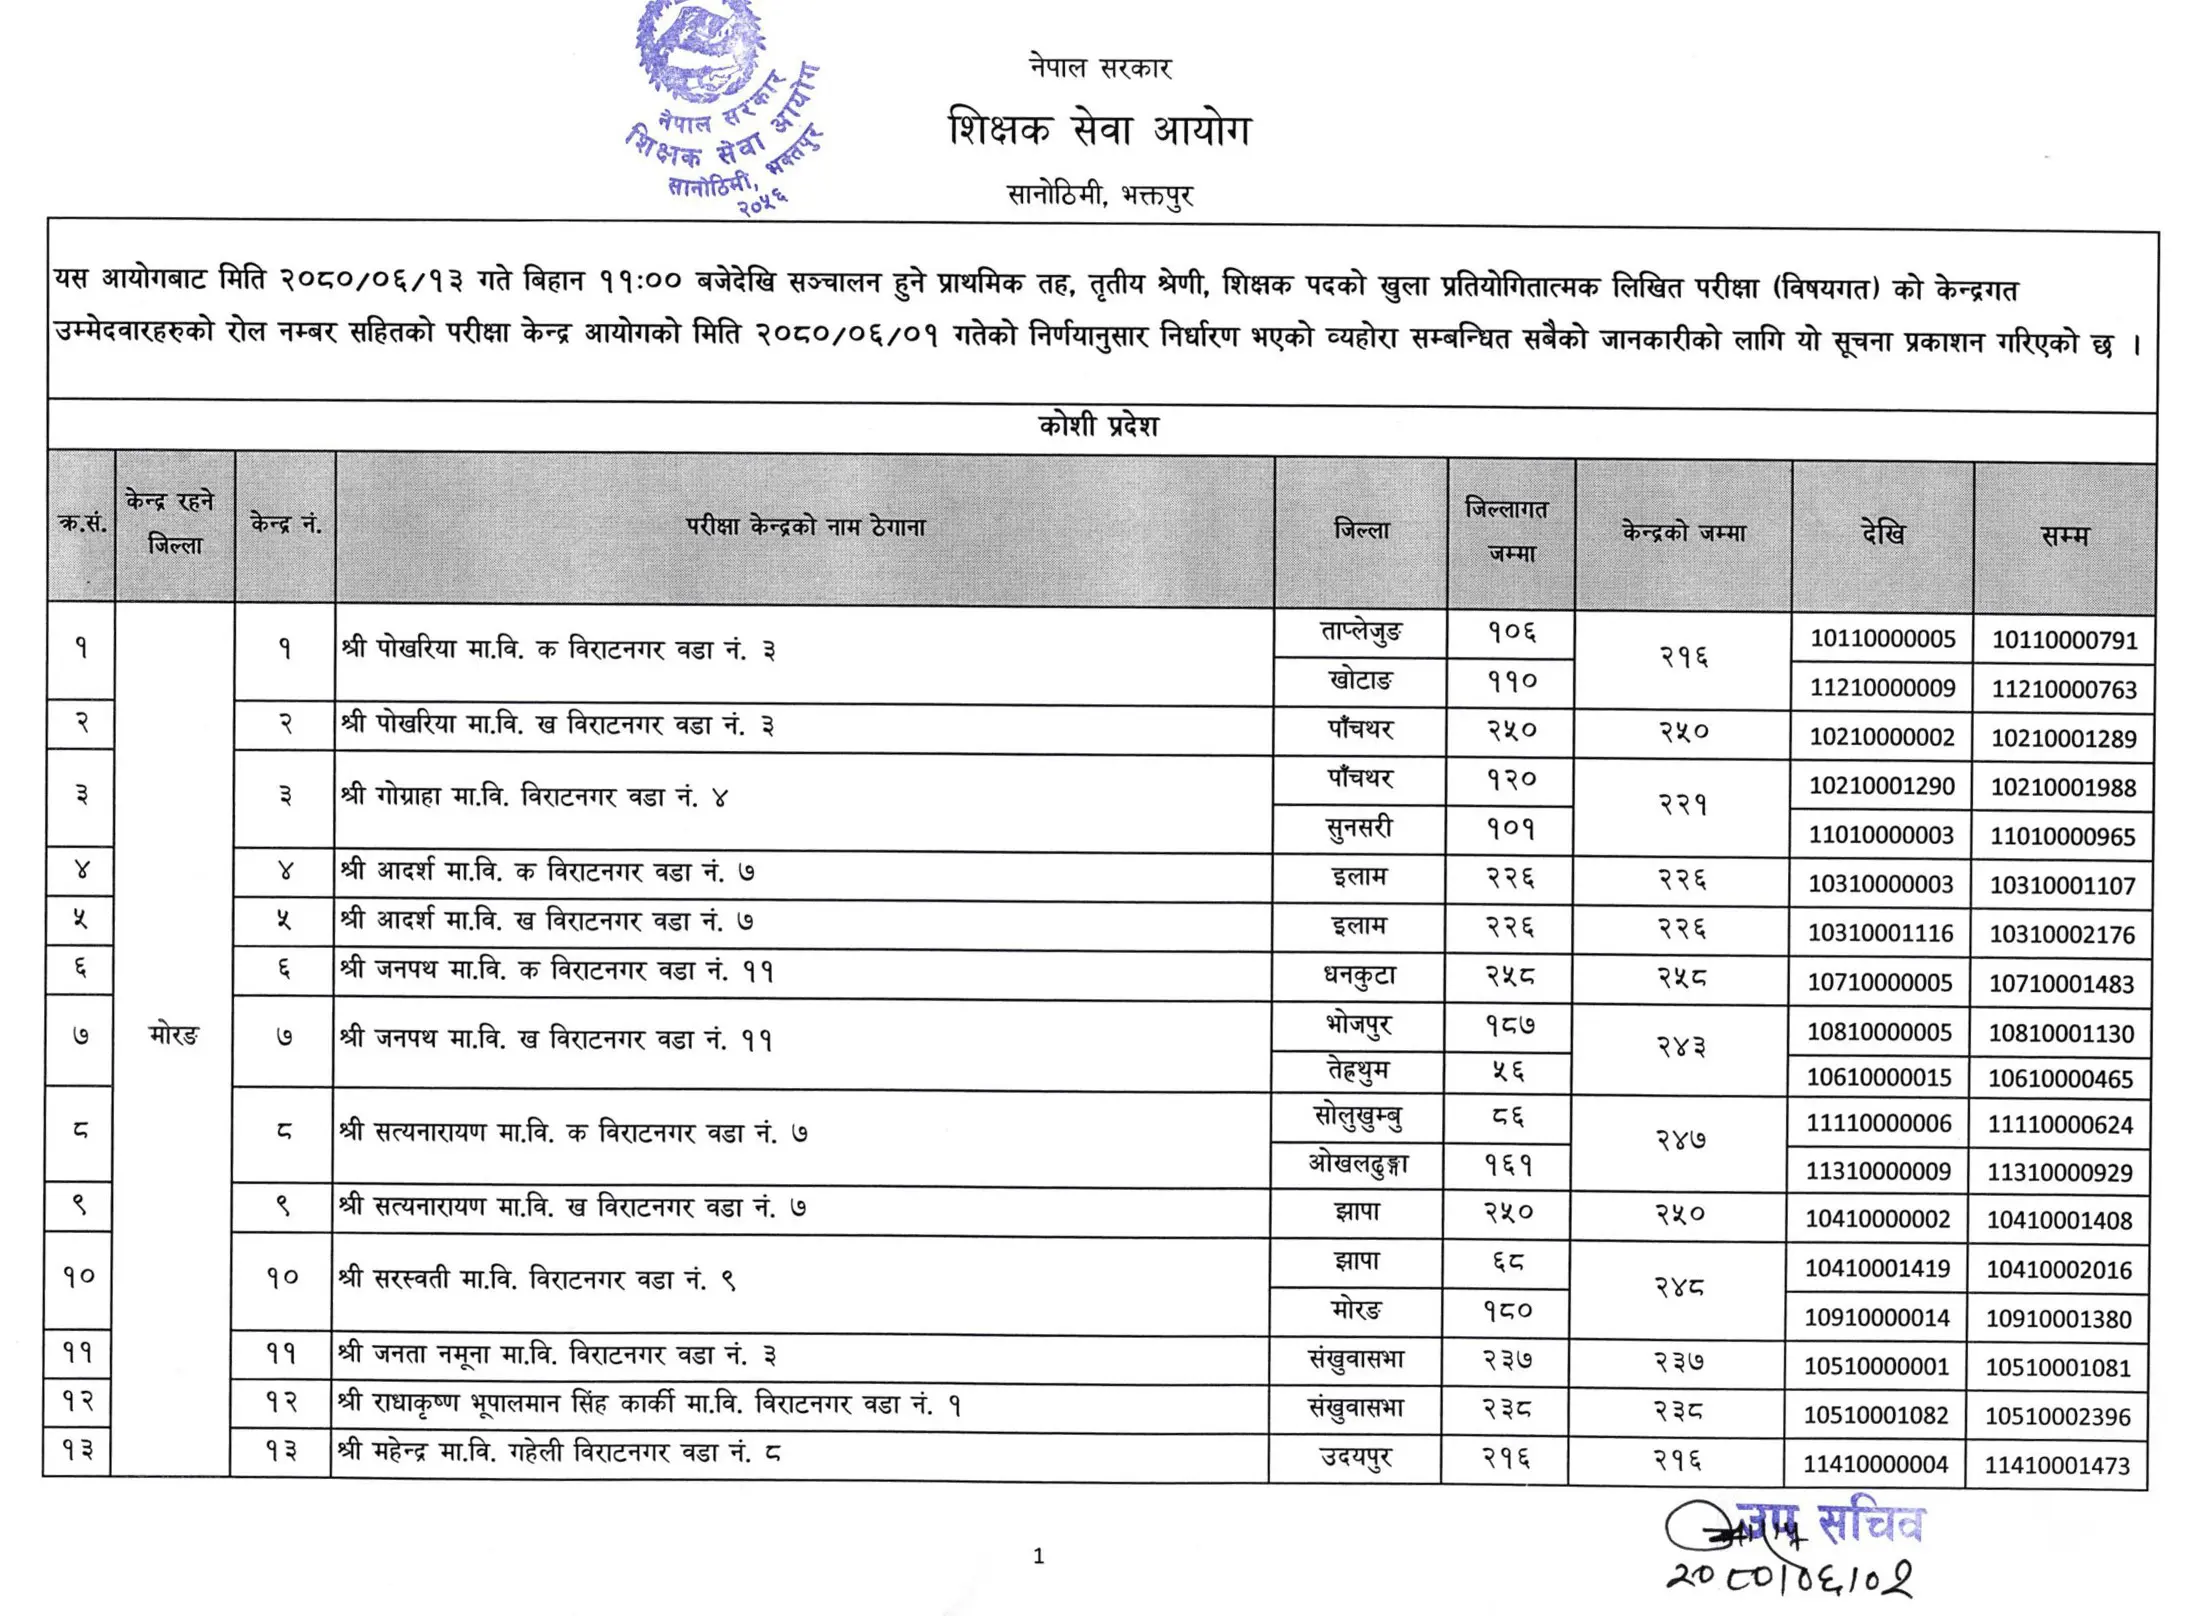 Koshi Pradesh Primary Level Written Examination Center 2080